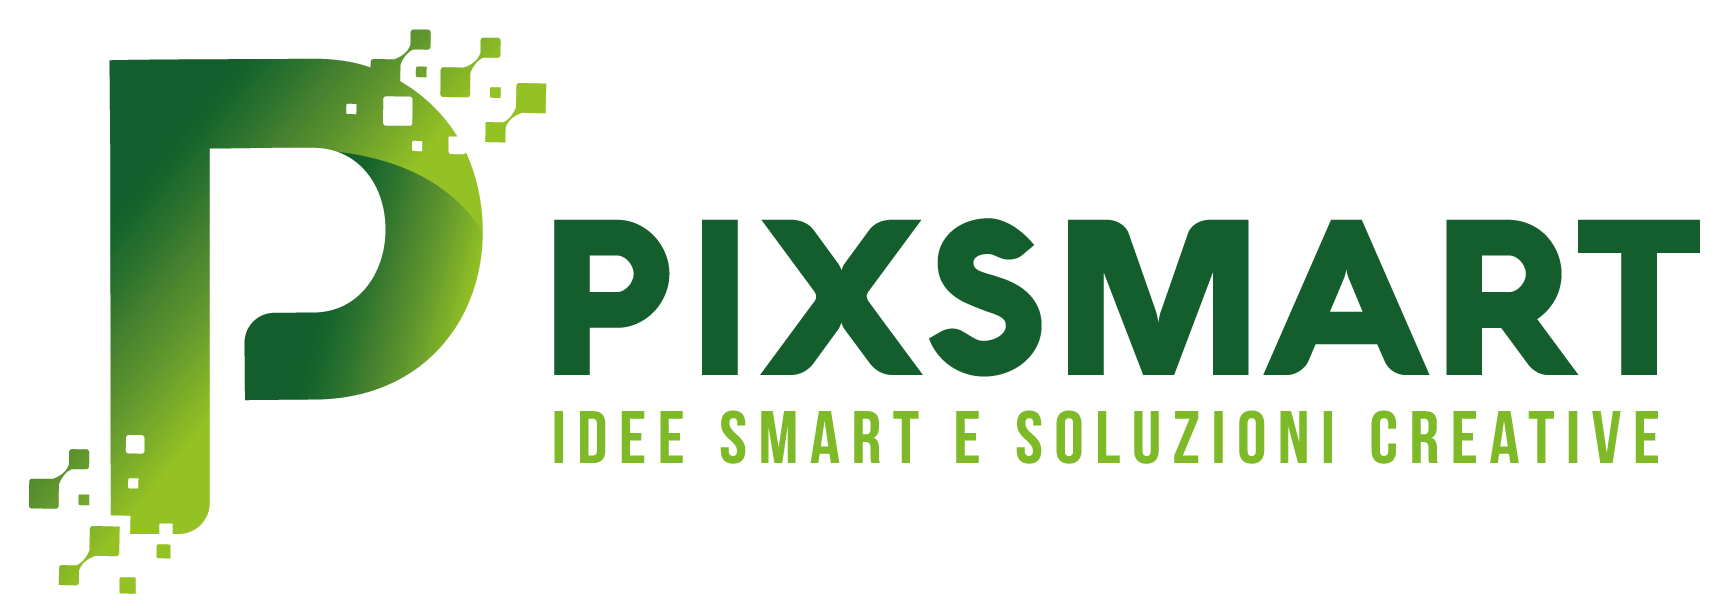 pixsmart logo